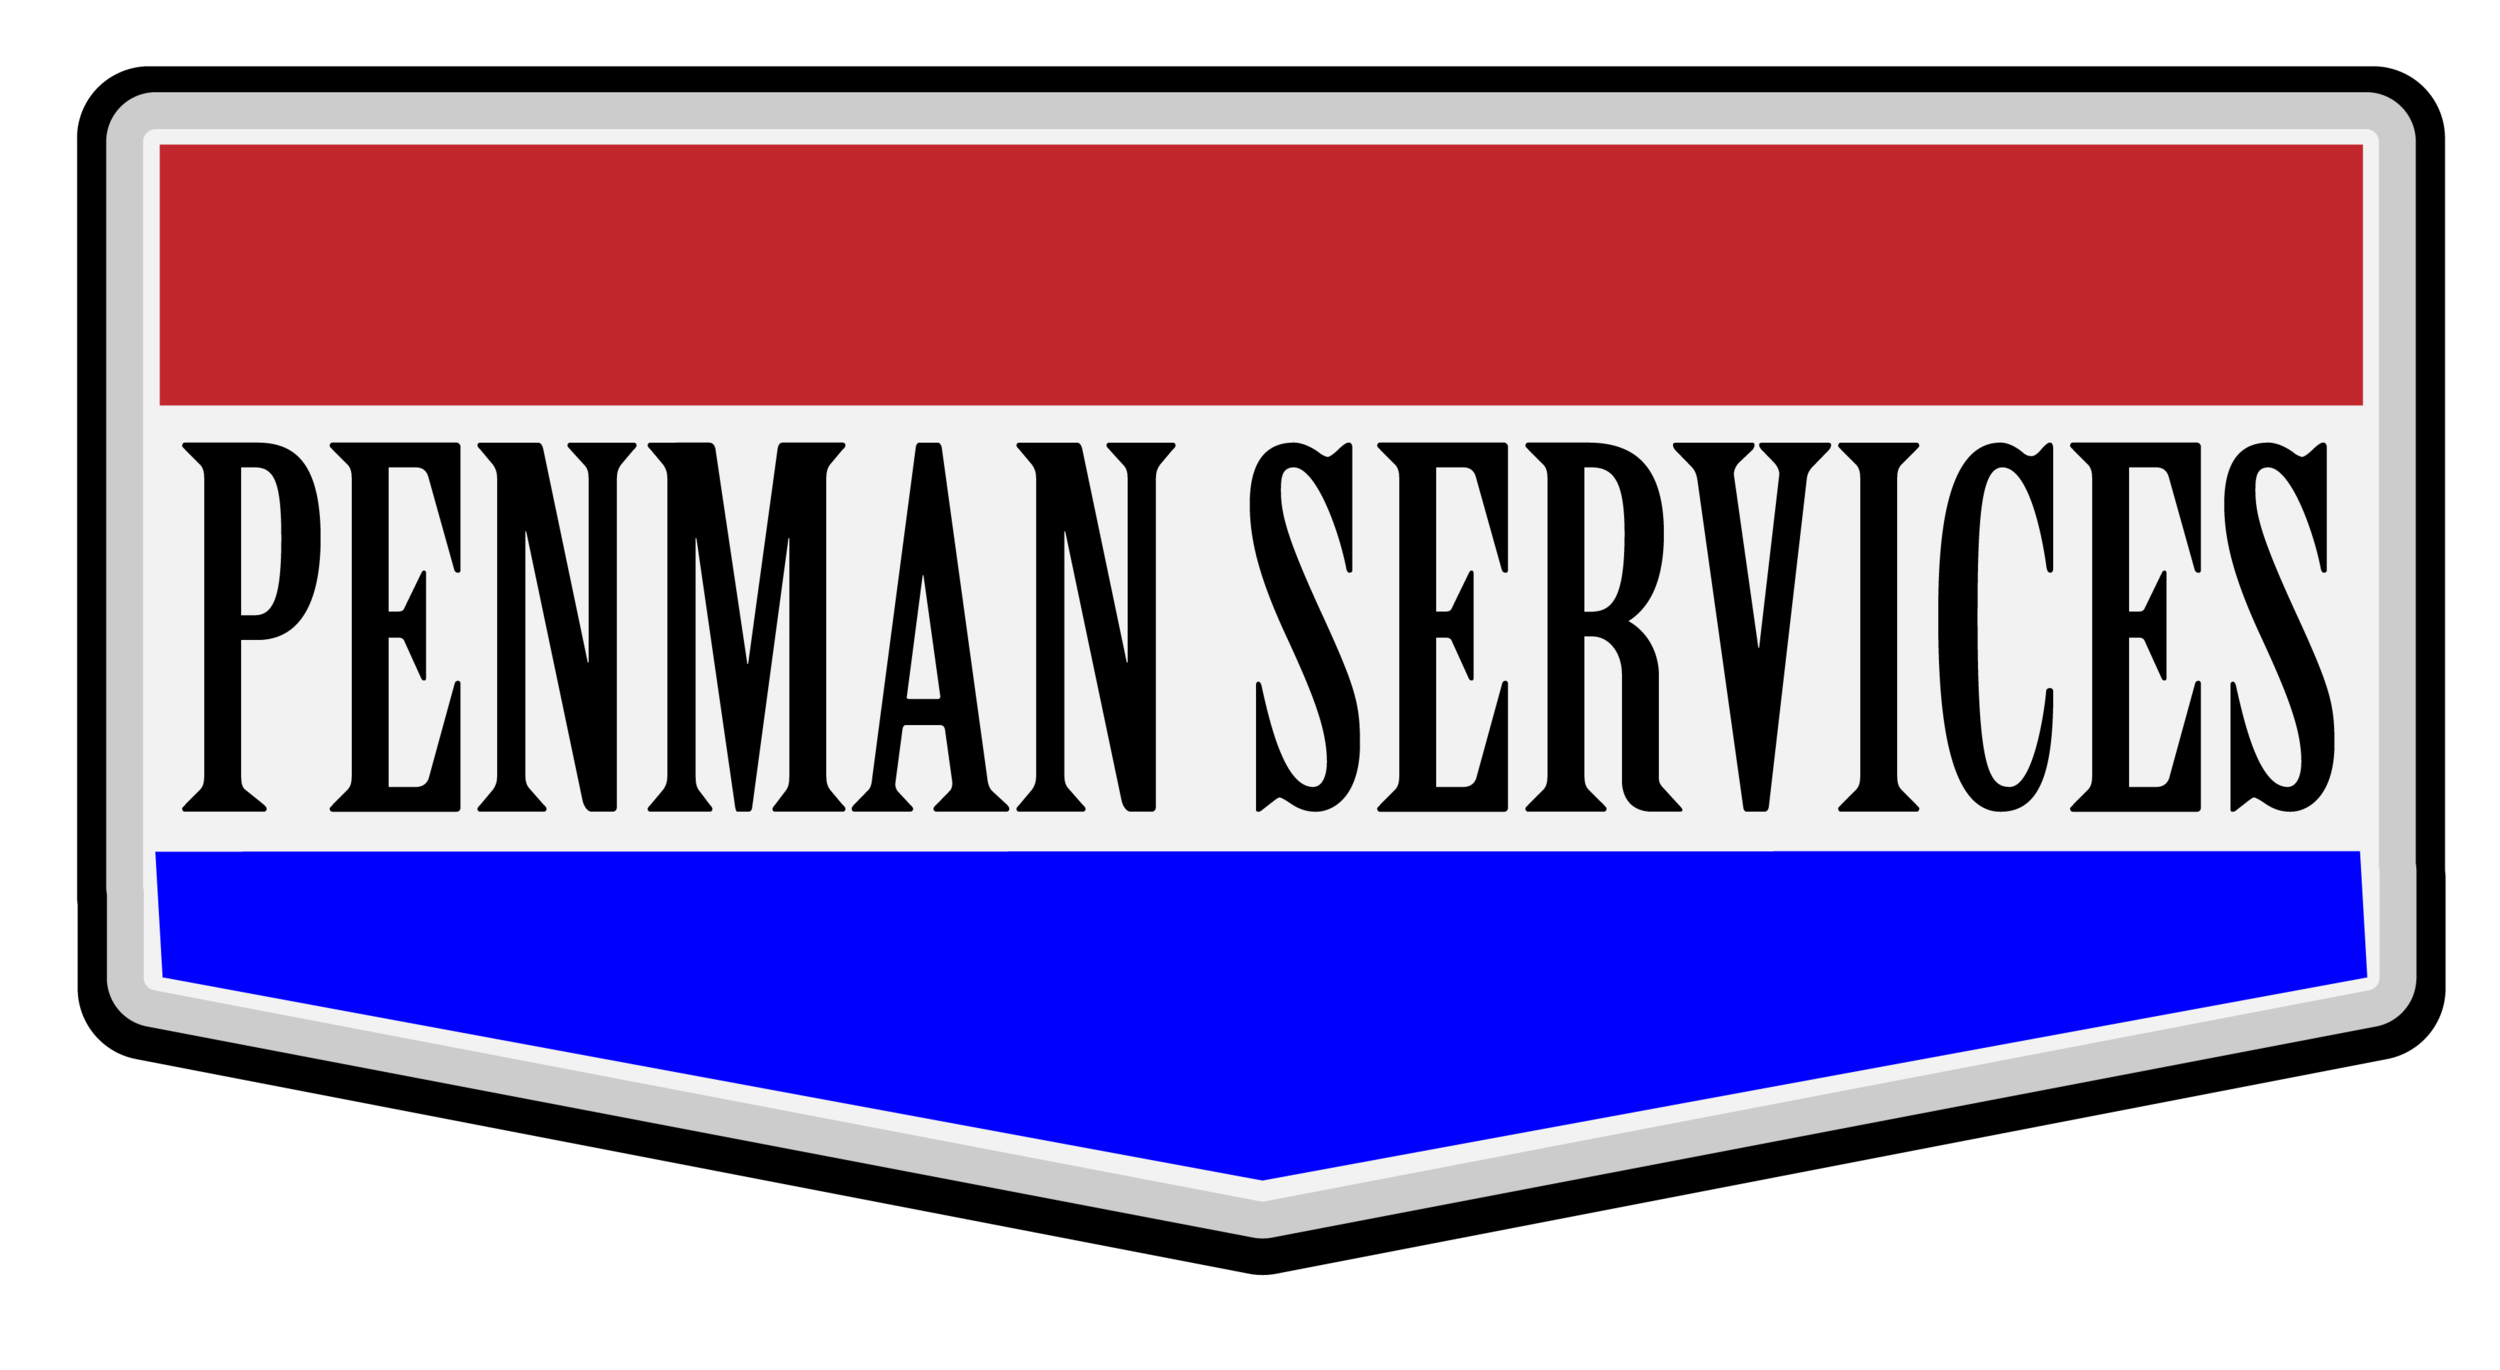 Penman Services